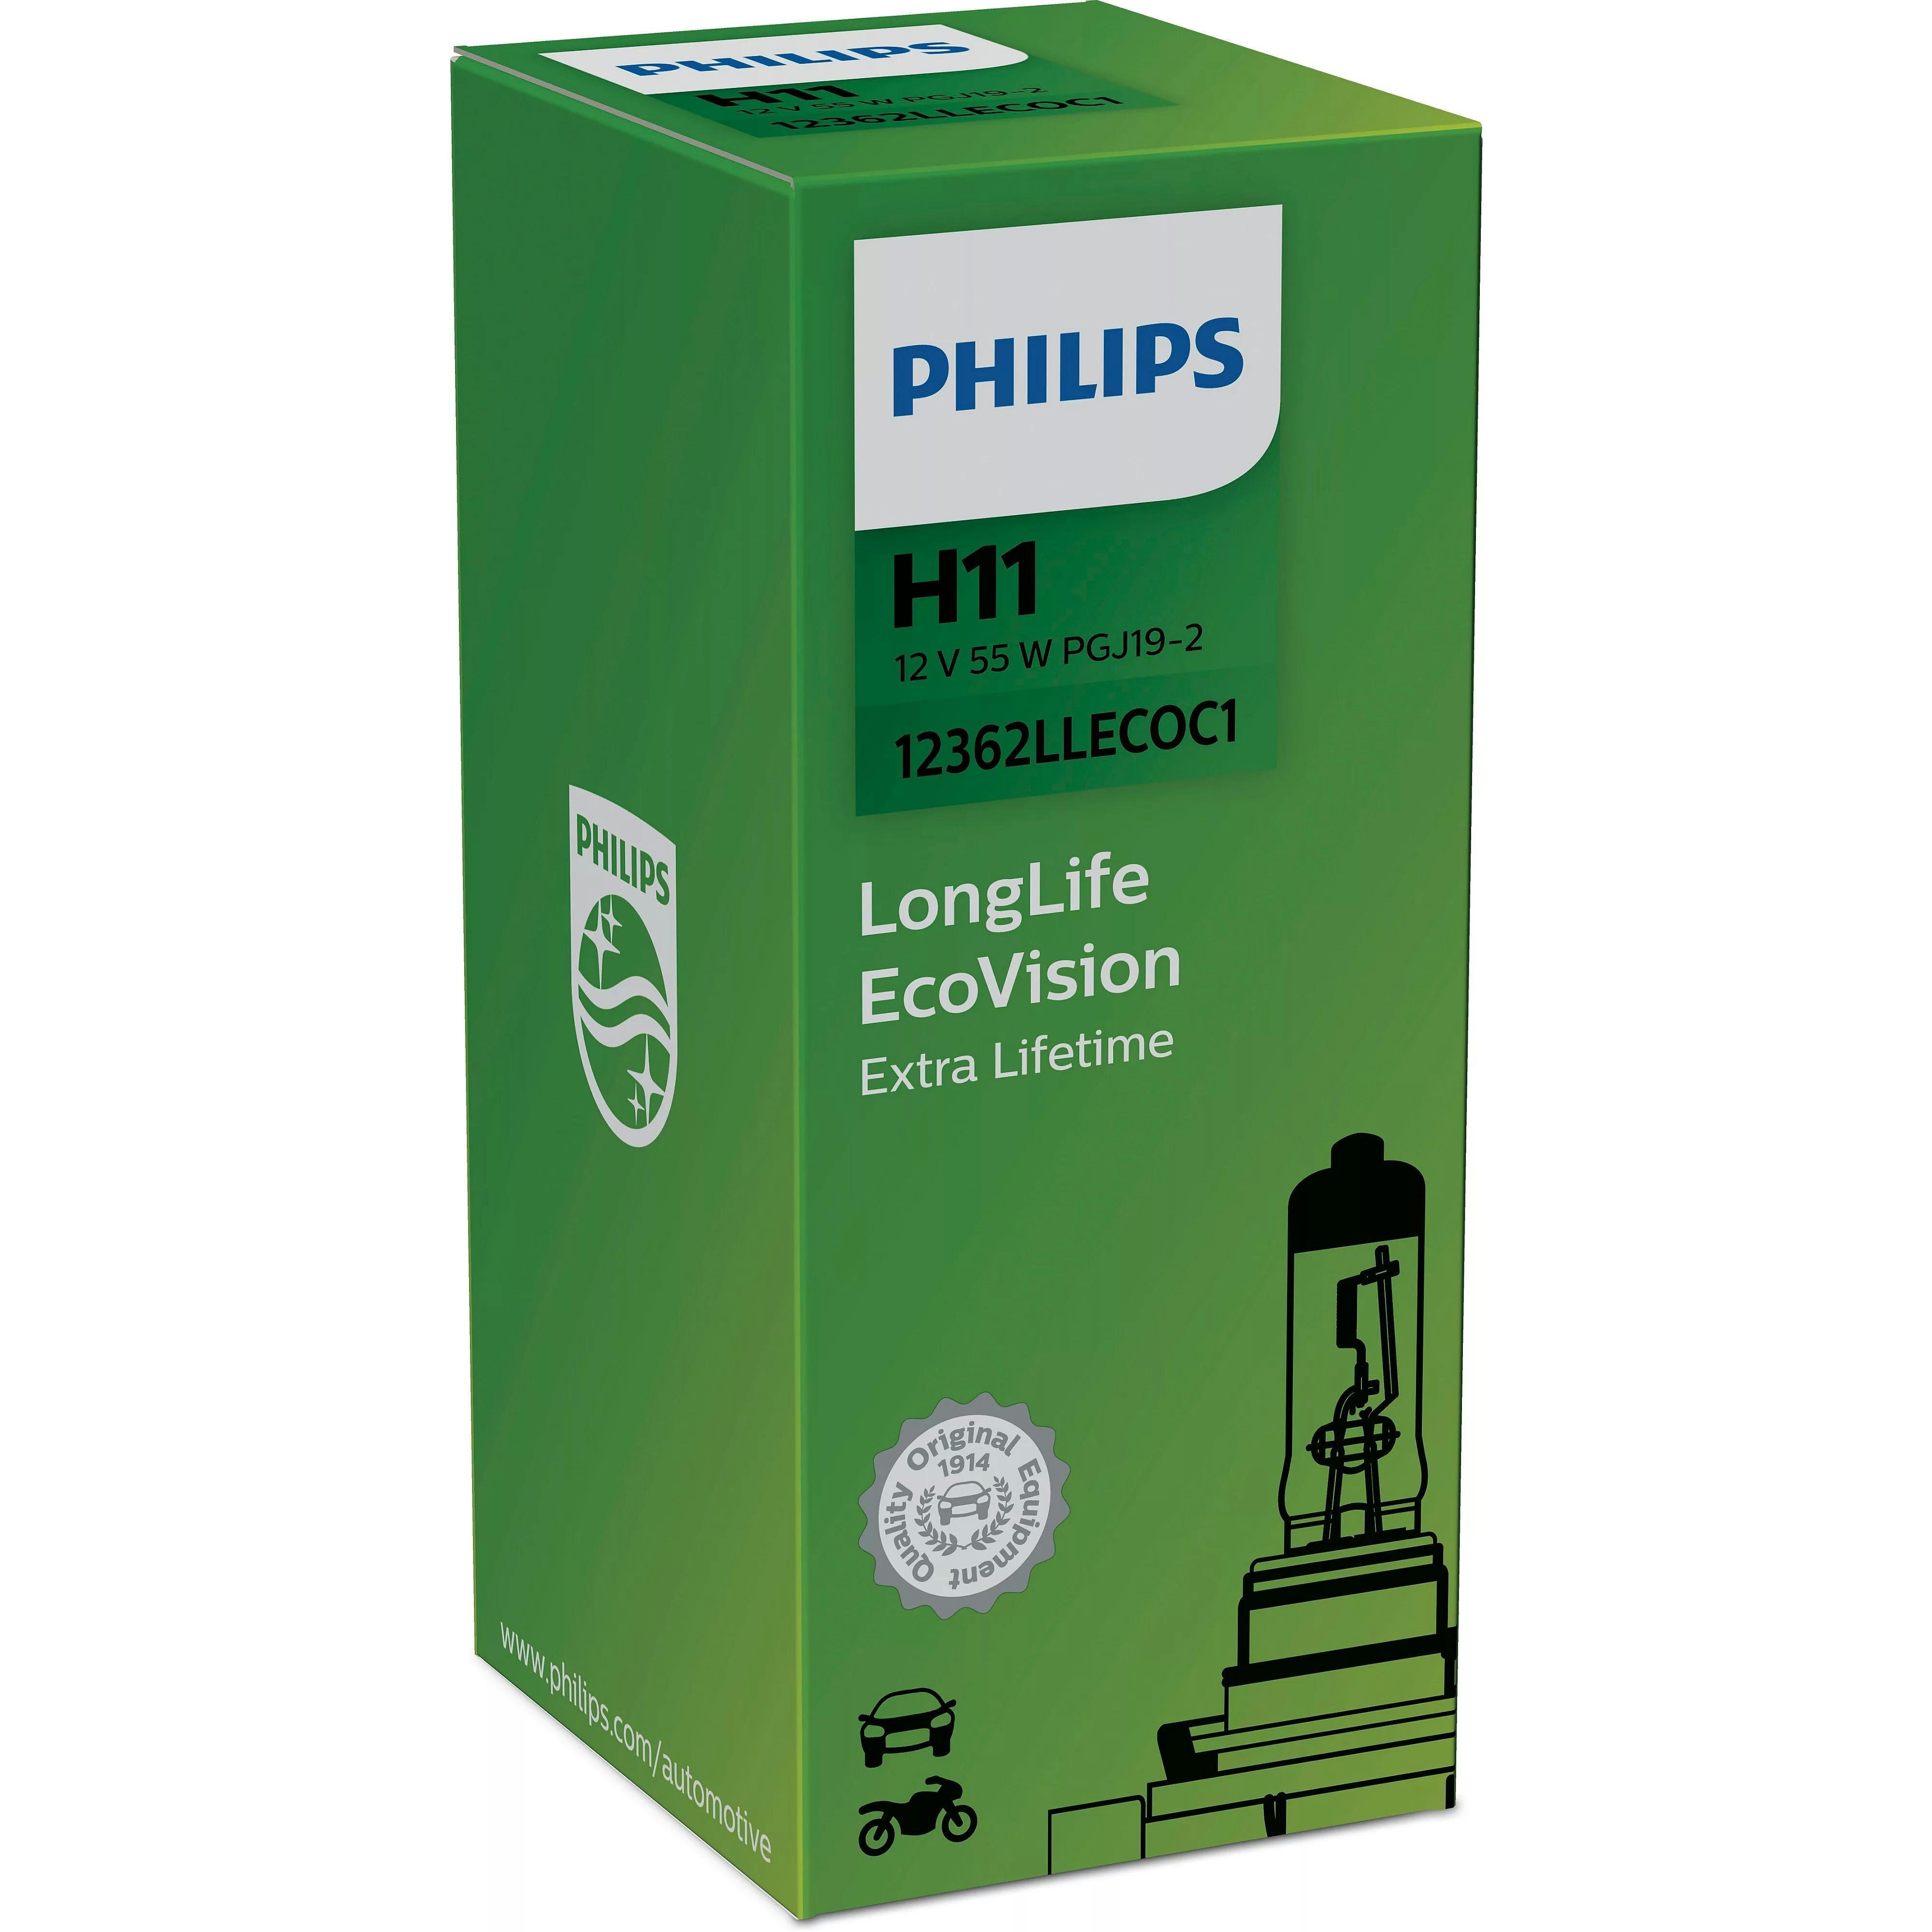 Лампа Philips галогеновая 12V H11 55W Pgj19-2 Longlife Ecovision (PS_12362_LLECO_C1) фото 1